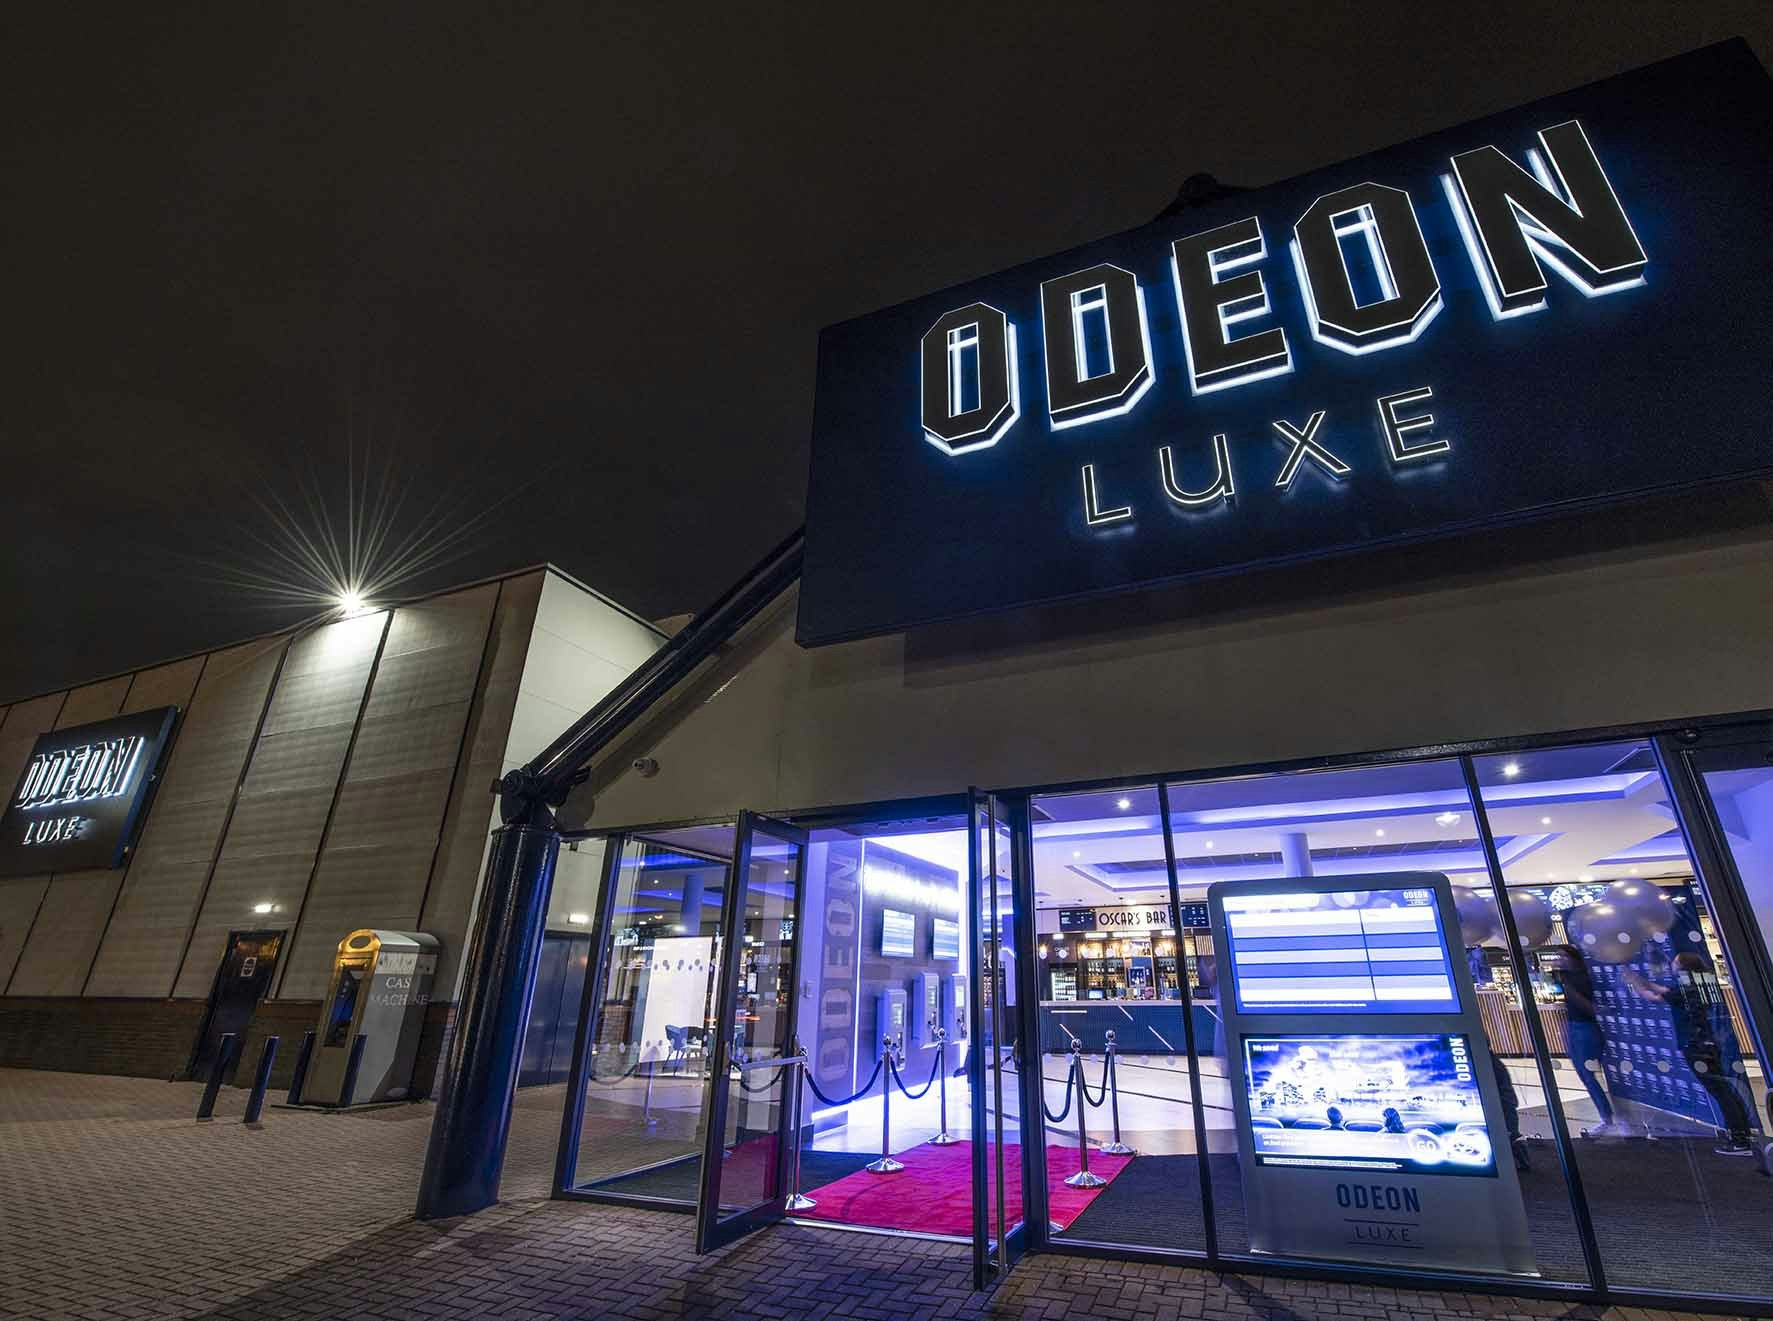 ODEON Luxe Hull - Screens image 4